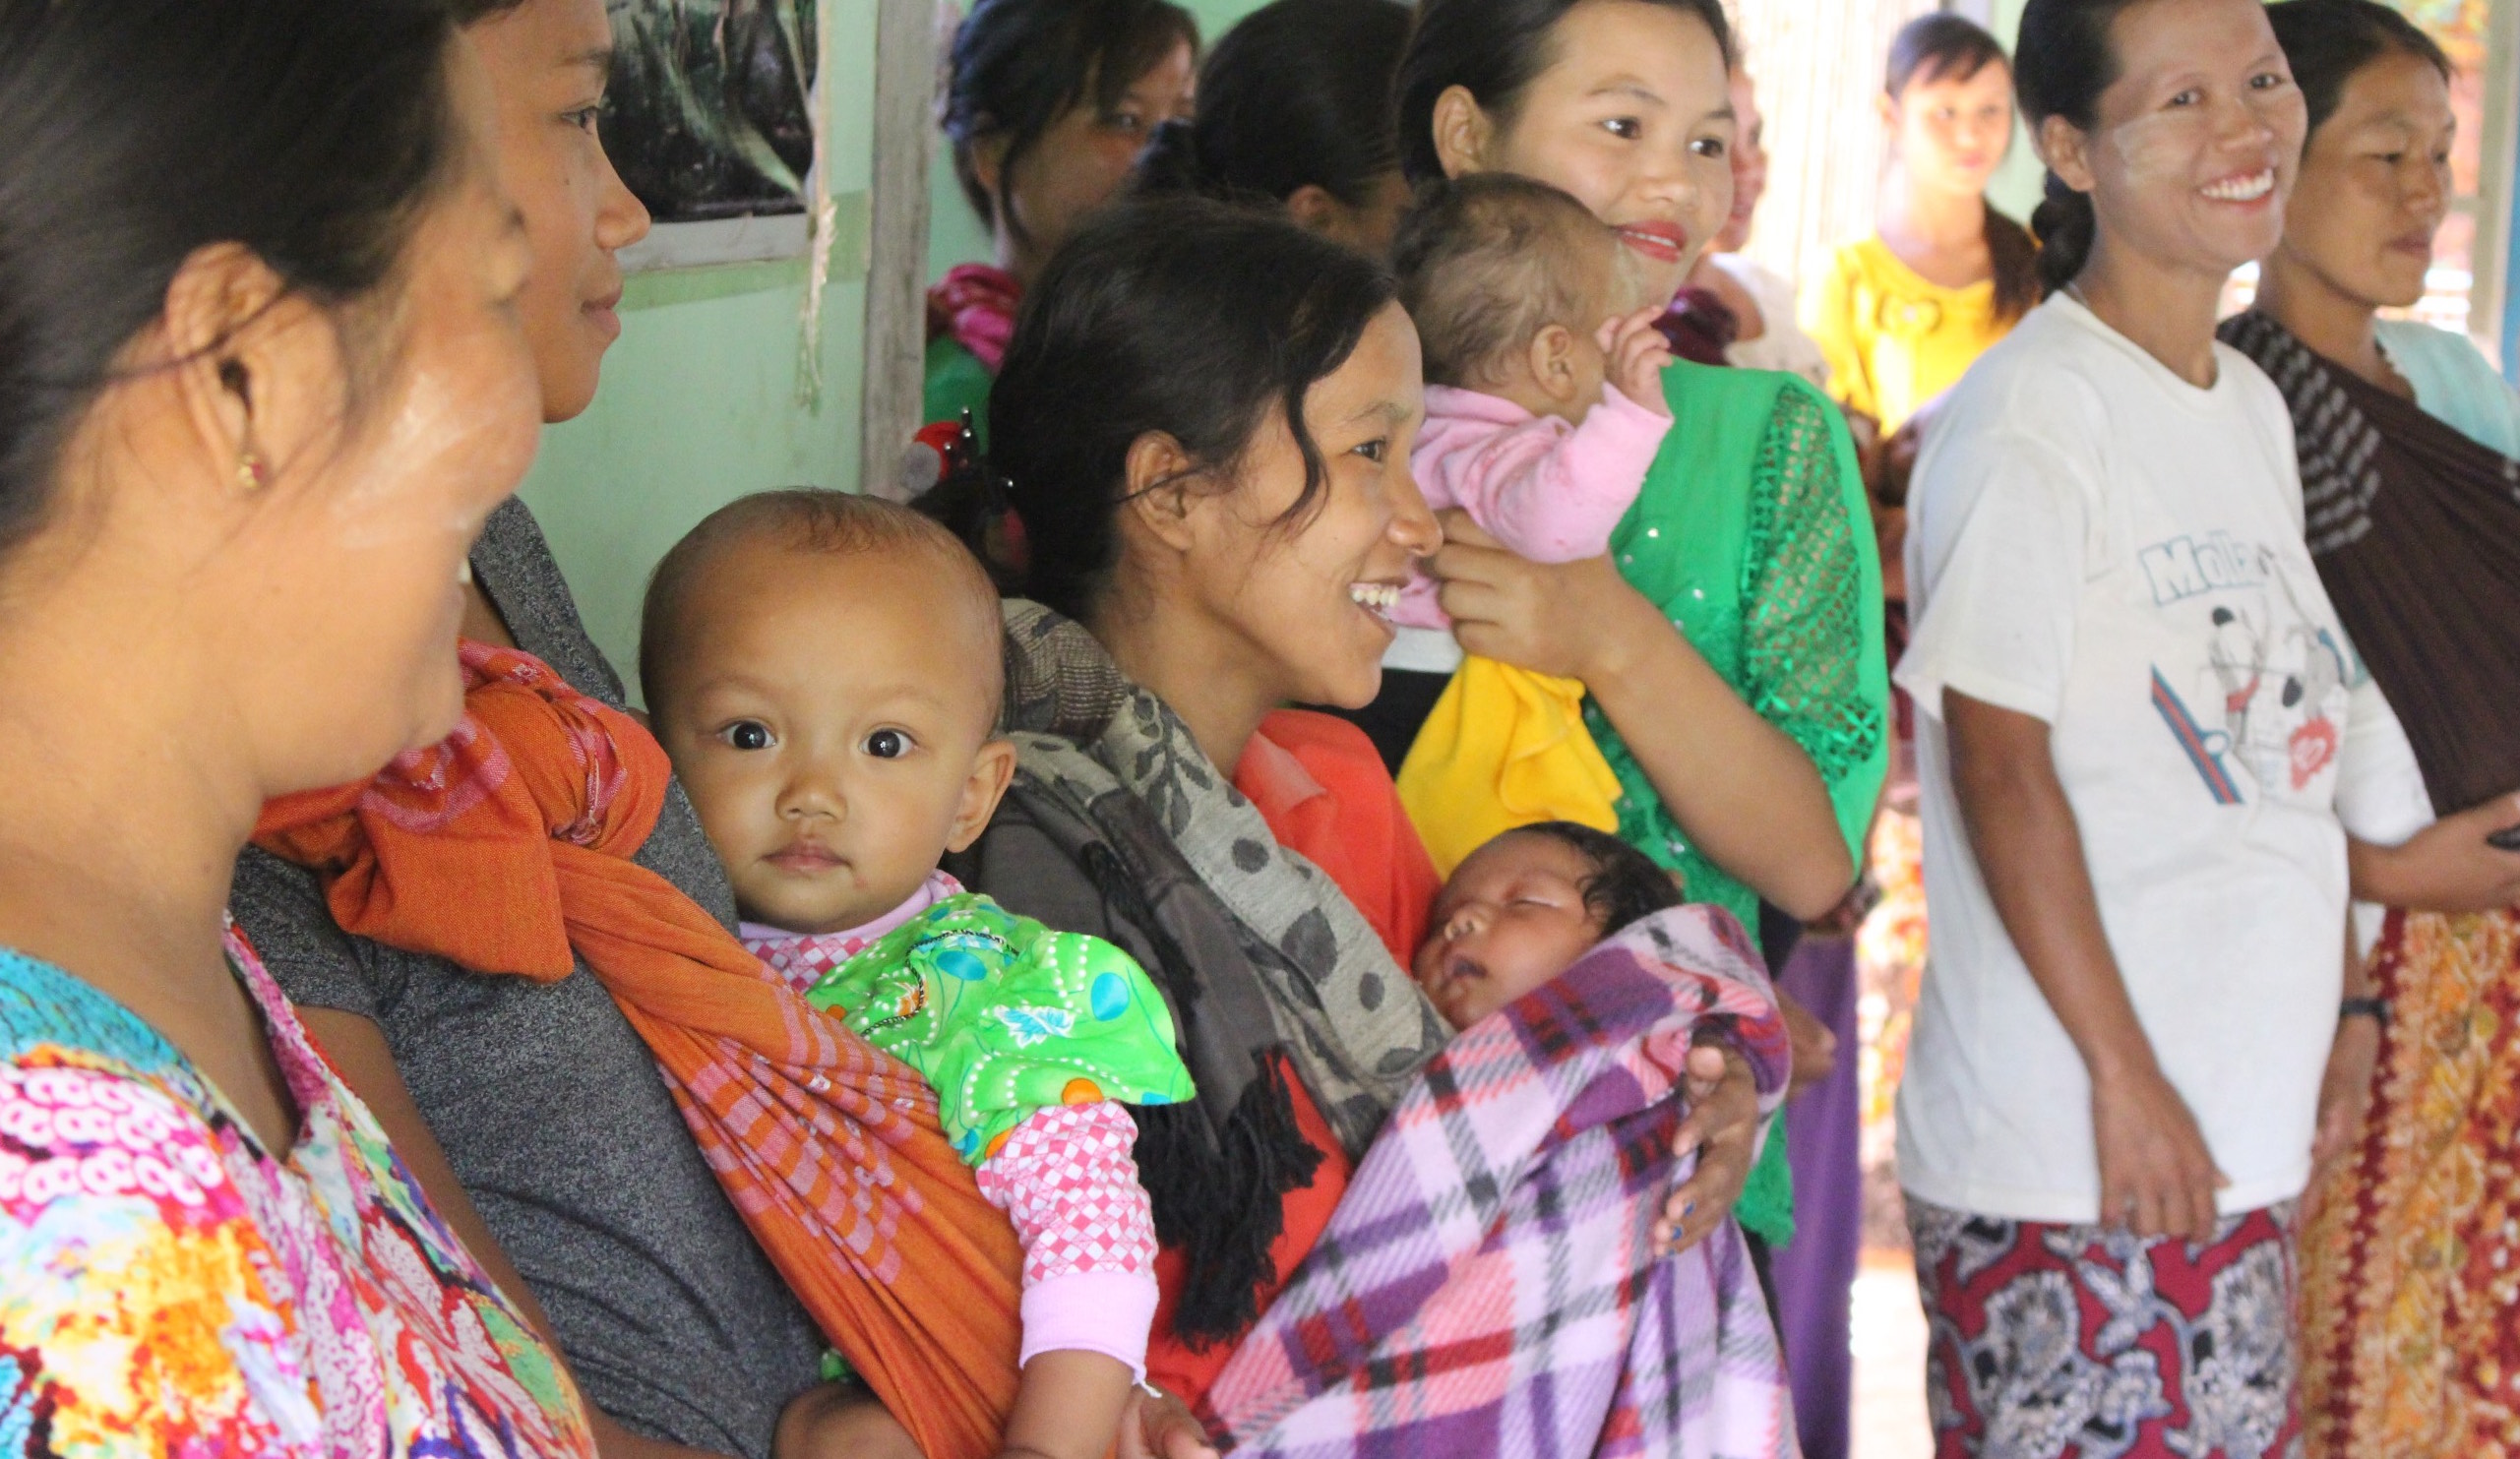 Life or death: Giving birth in Burma